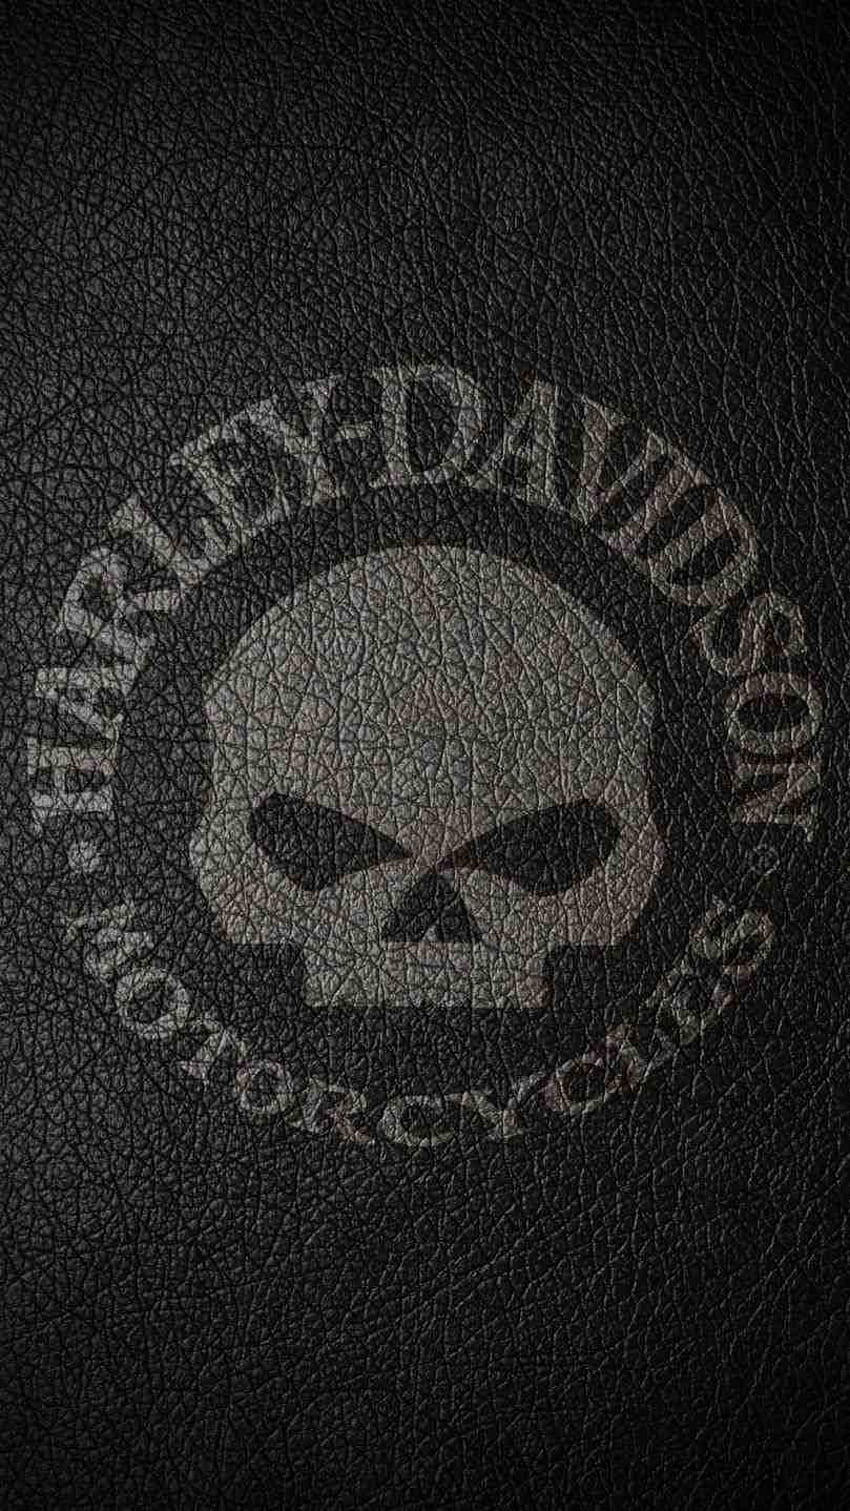 Emblema Harley Davidson, logo harley davidson Papel de parede de celular HD